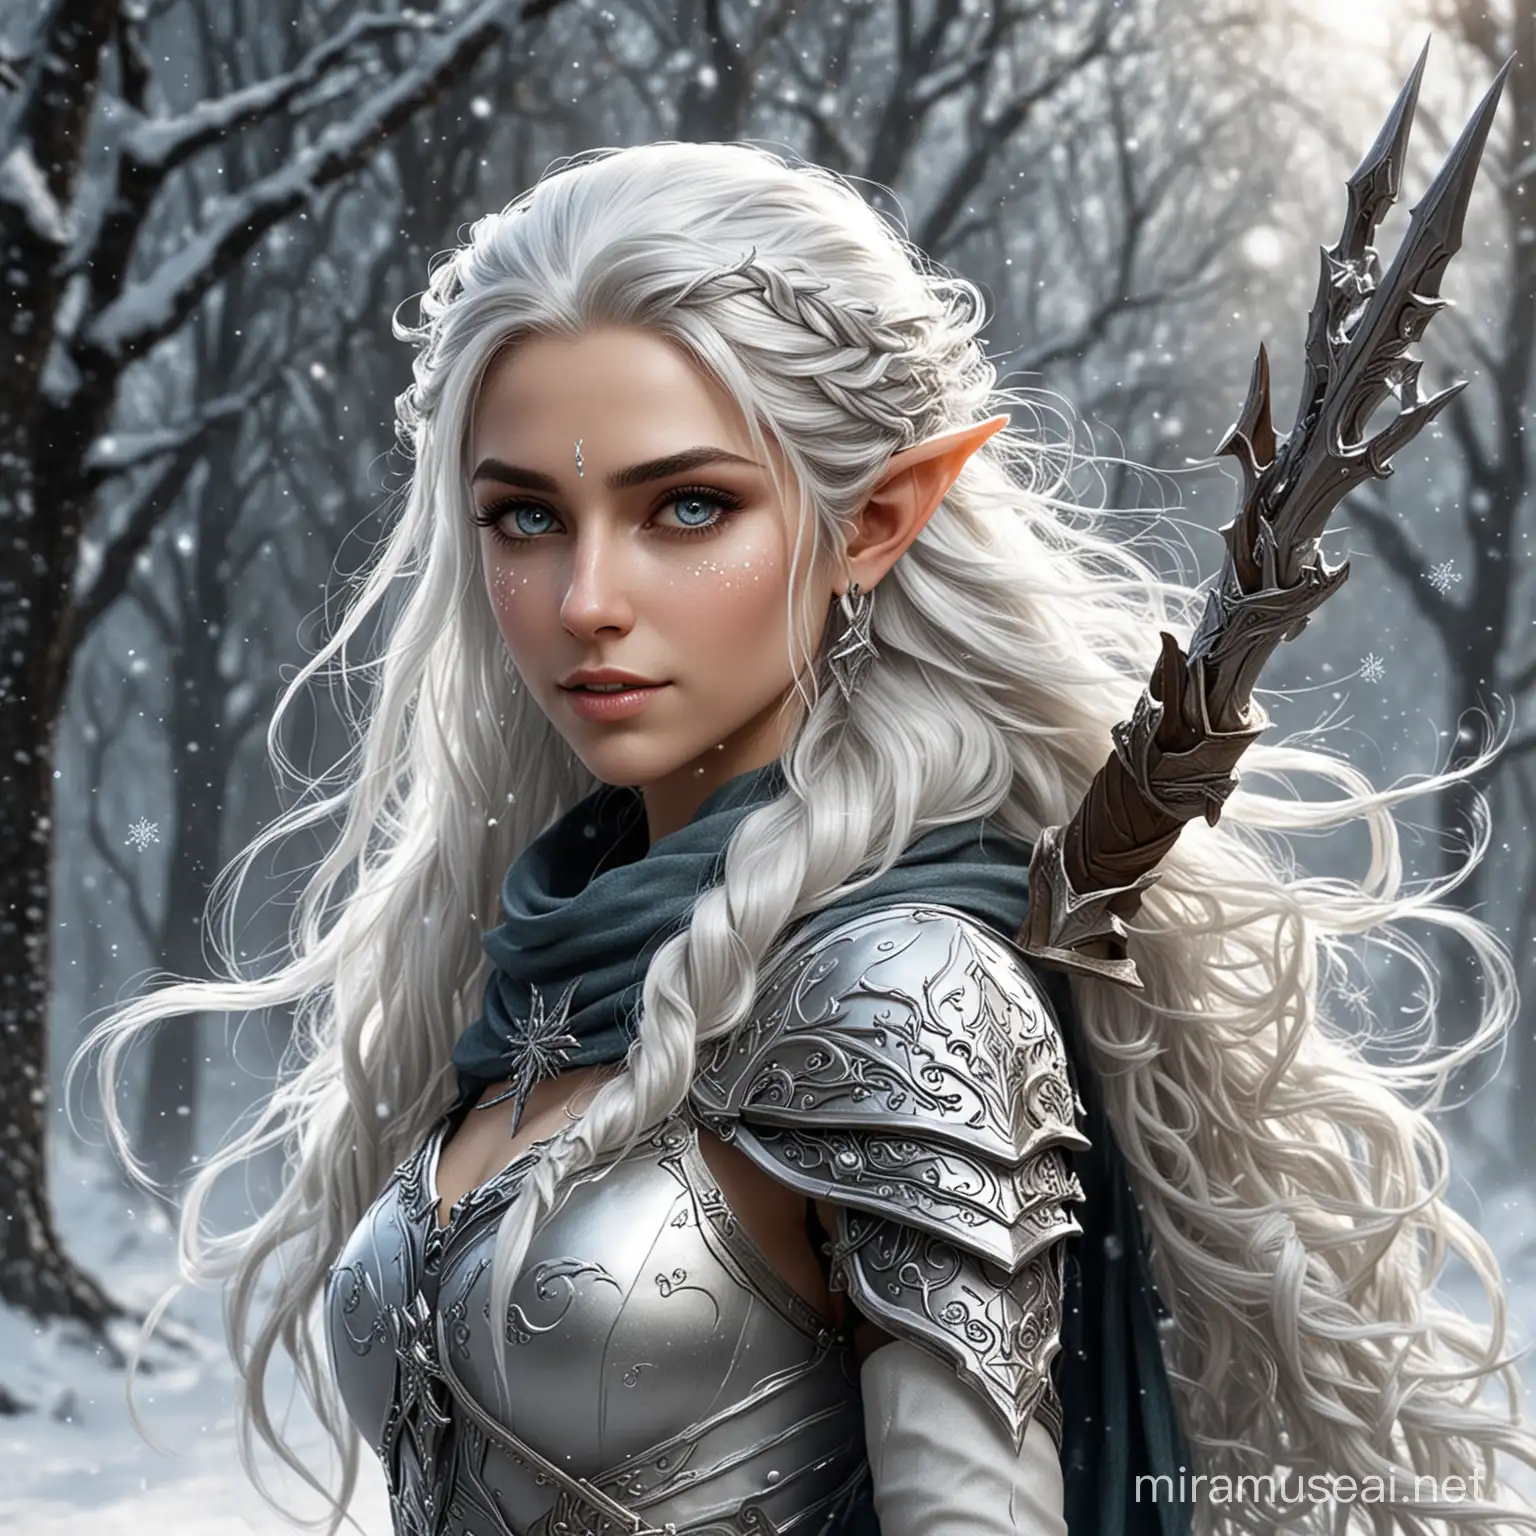 Snowflake Elf Ranger with Long Silver Hair Fantasy Winter Character Art